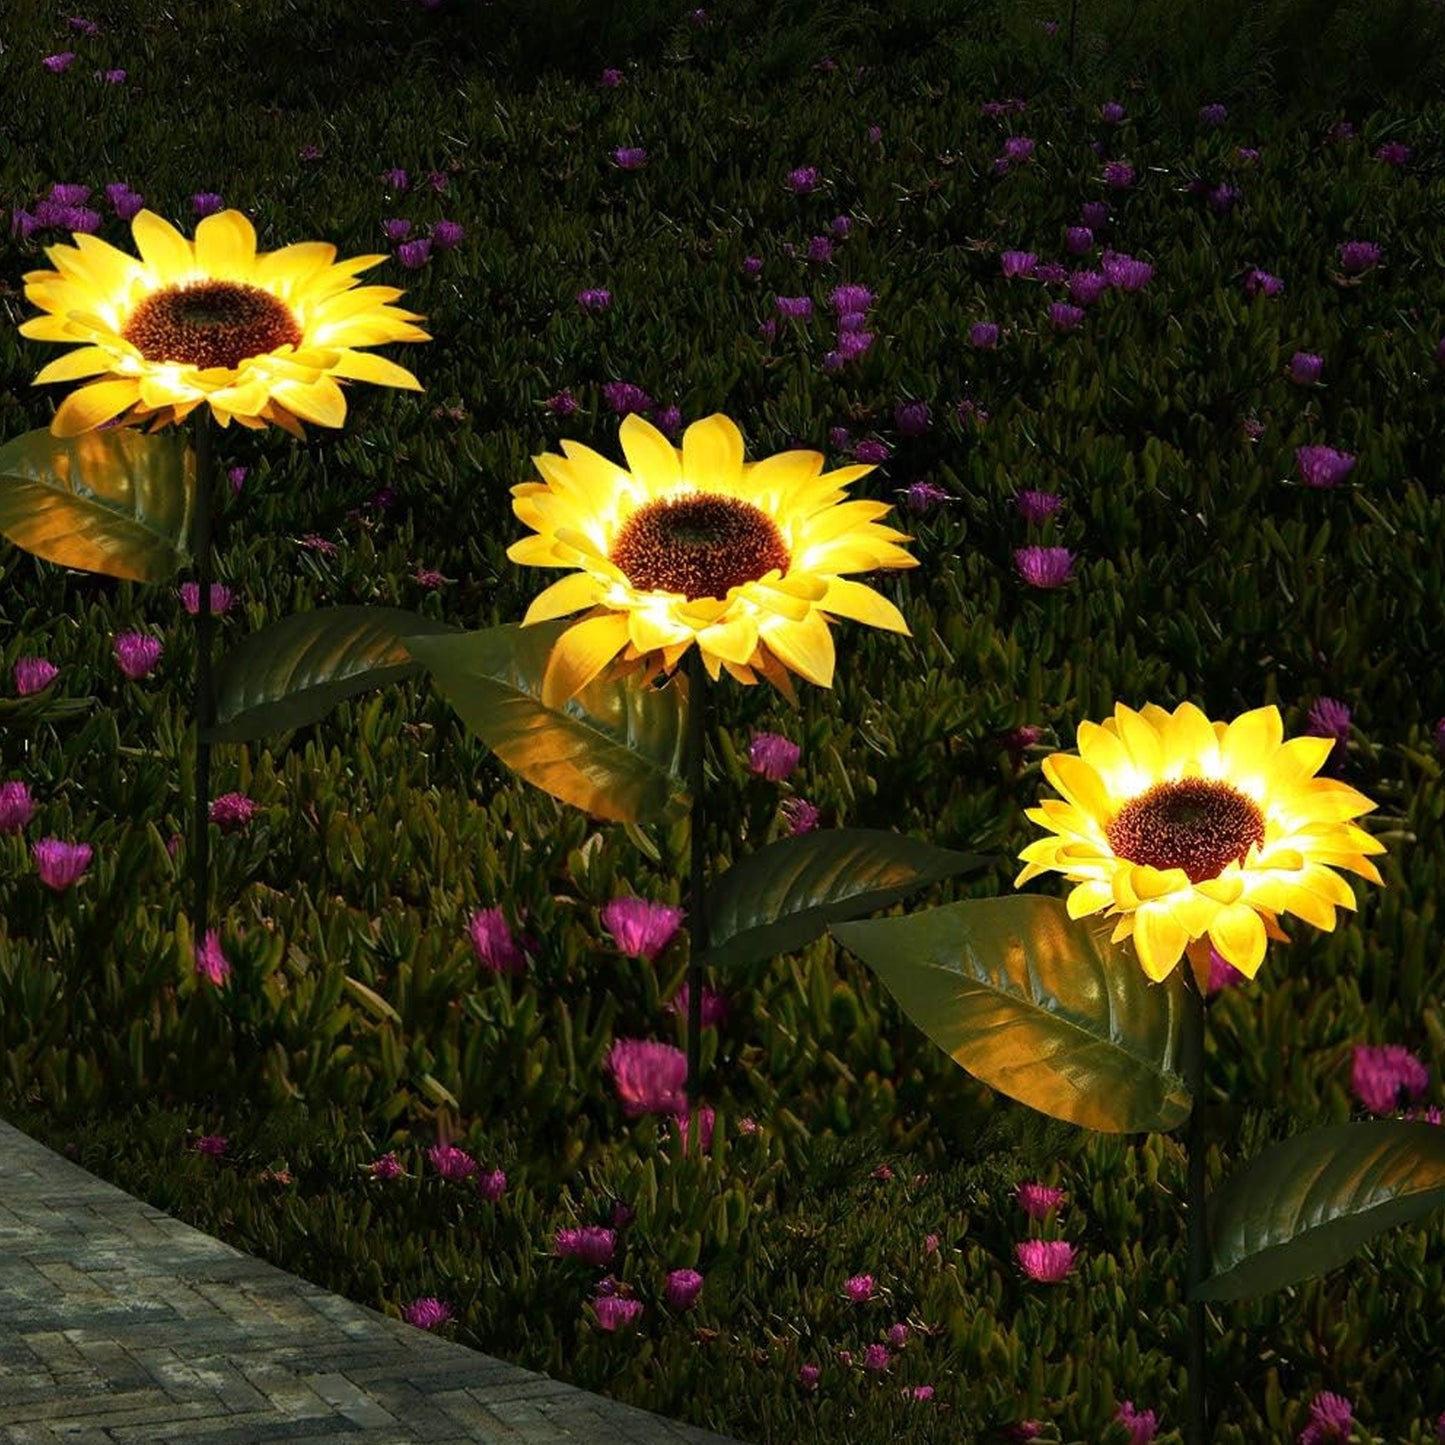 Solar Sunflower Lights, Waterproof Solar Sunflower LED Light For Outdoor & Garden, Yard Decorations